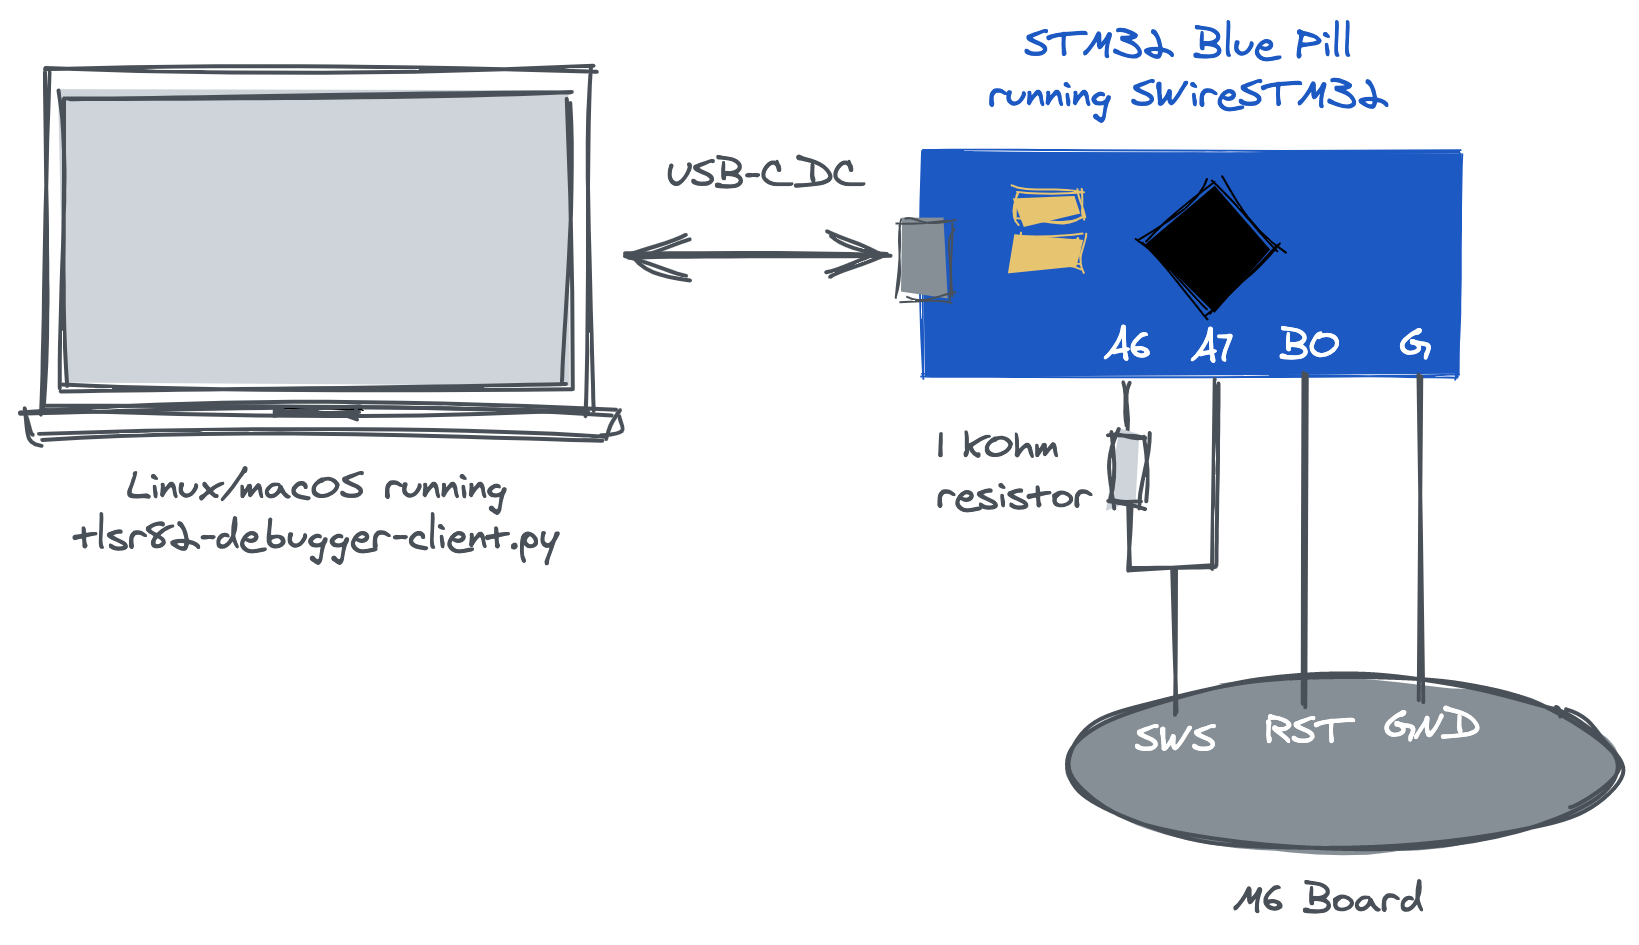 STM32 programmer + M6 setup